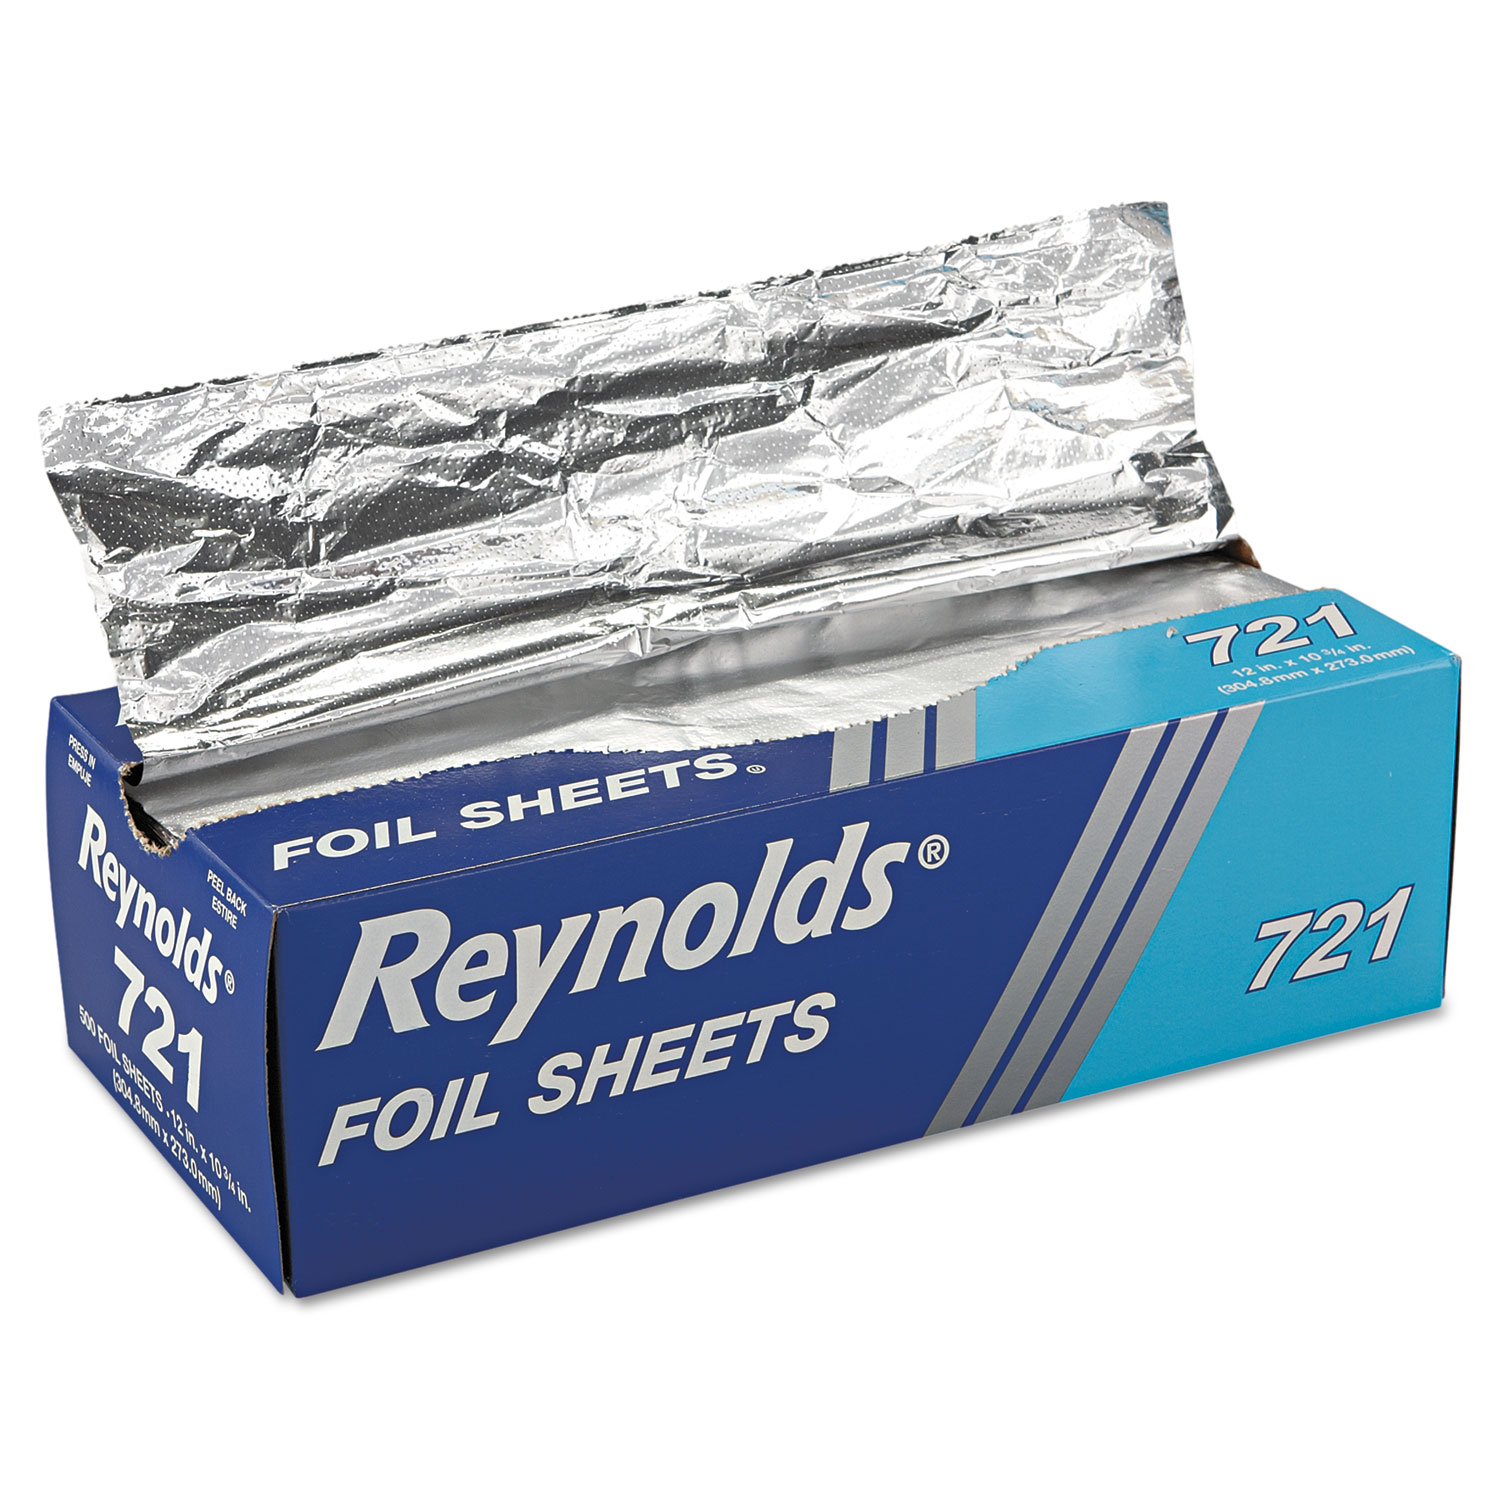  Reynolds Wrap 000000000000000721 Interfolded Aluminum Foil Sheets, 12 x 10 3/4, Silver, 500/Box, 6 Boxes/Carton (RFP721) 